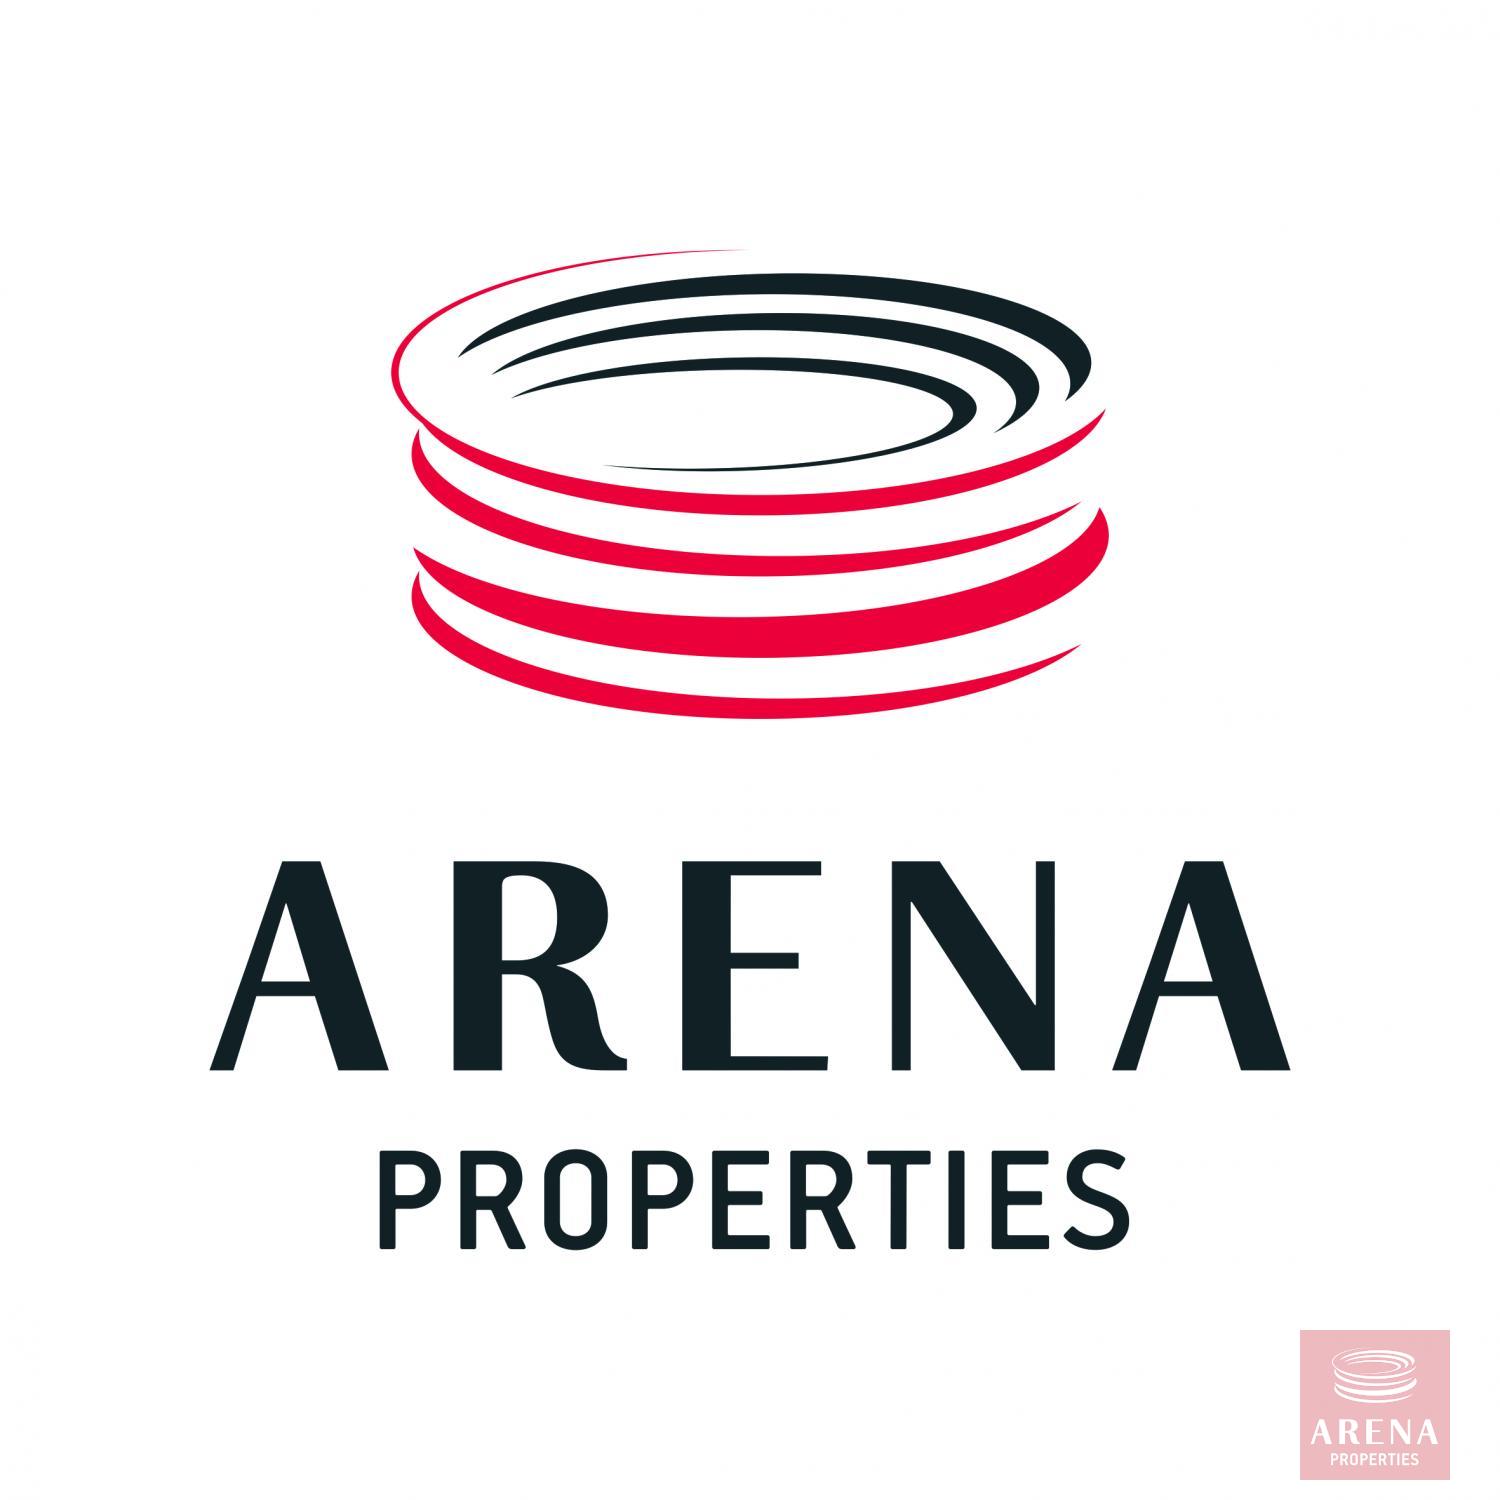 arena properties logo white 2